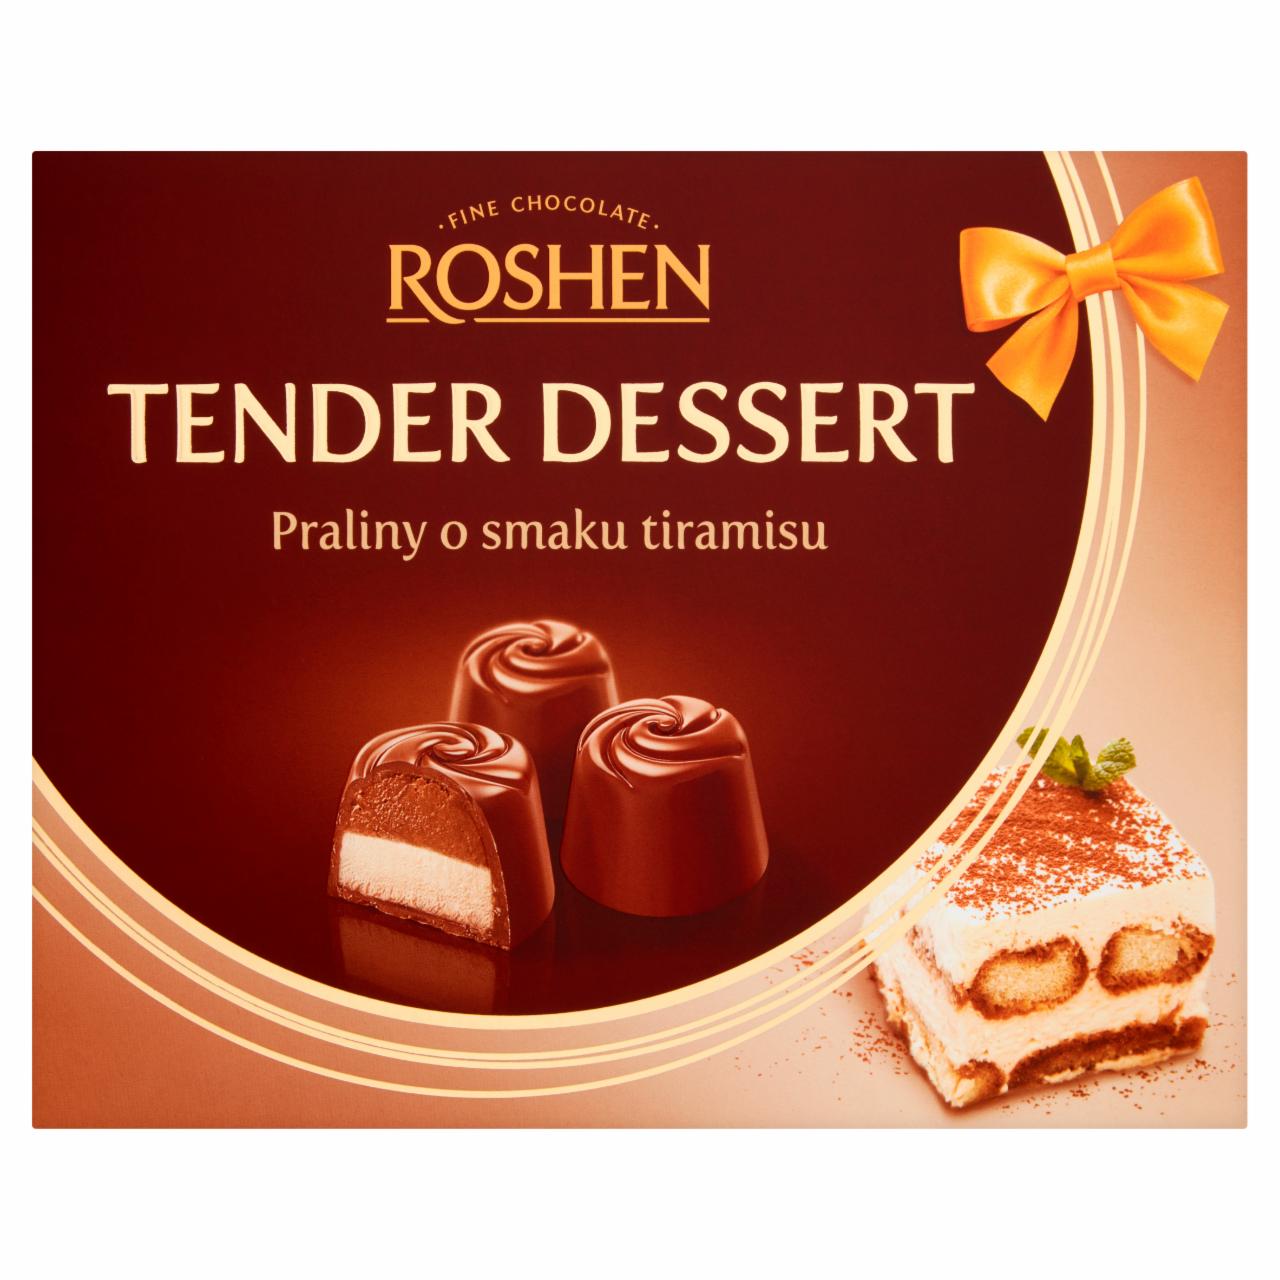 Zdjęcia - Roshen Tender Dessert Praliny o smaku tiramisu 120 g